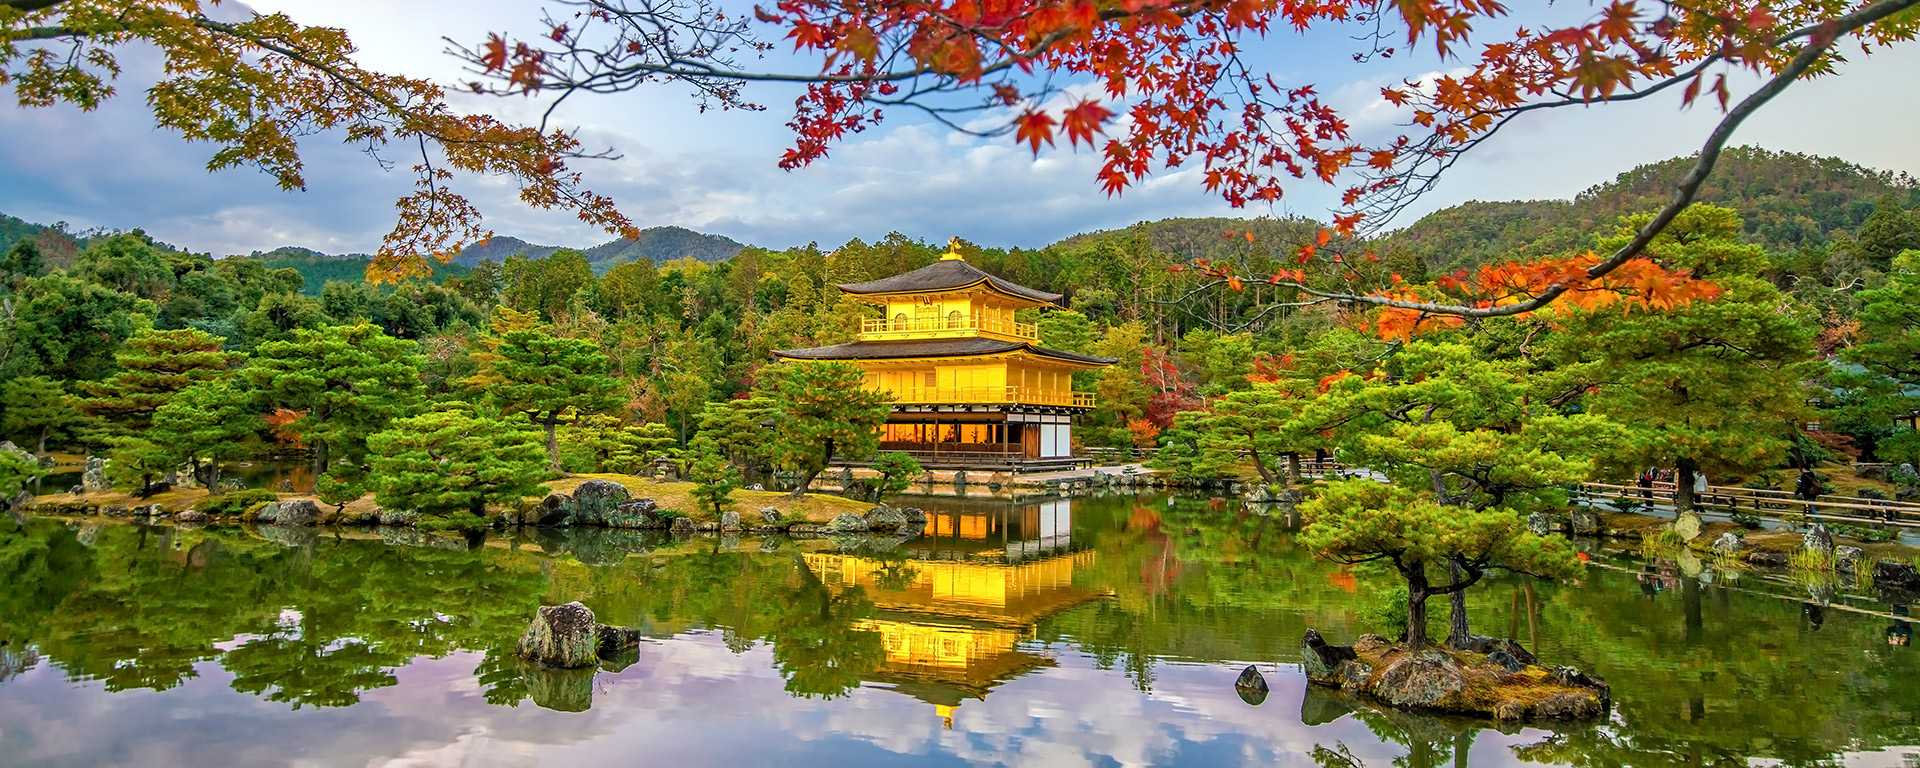 Kyoto-Golden-Pavilion-of-Kinkaku-ji-temple